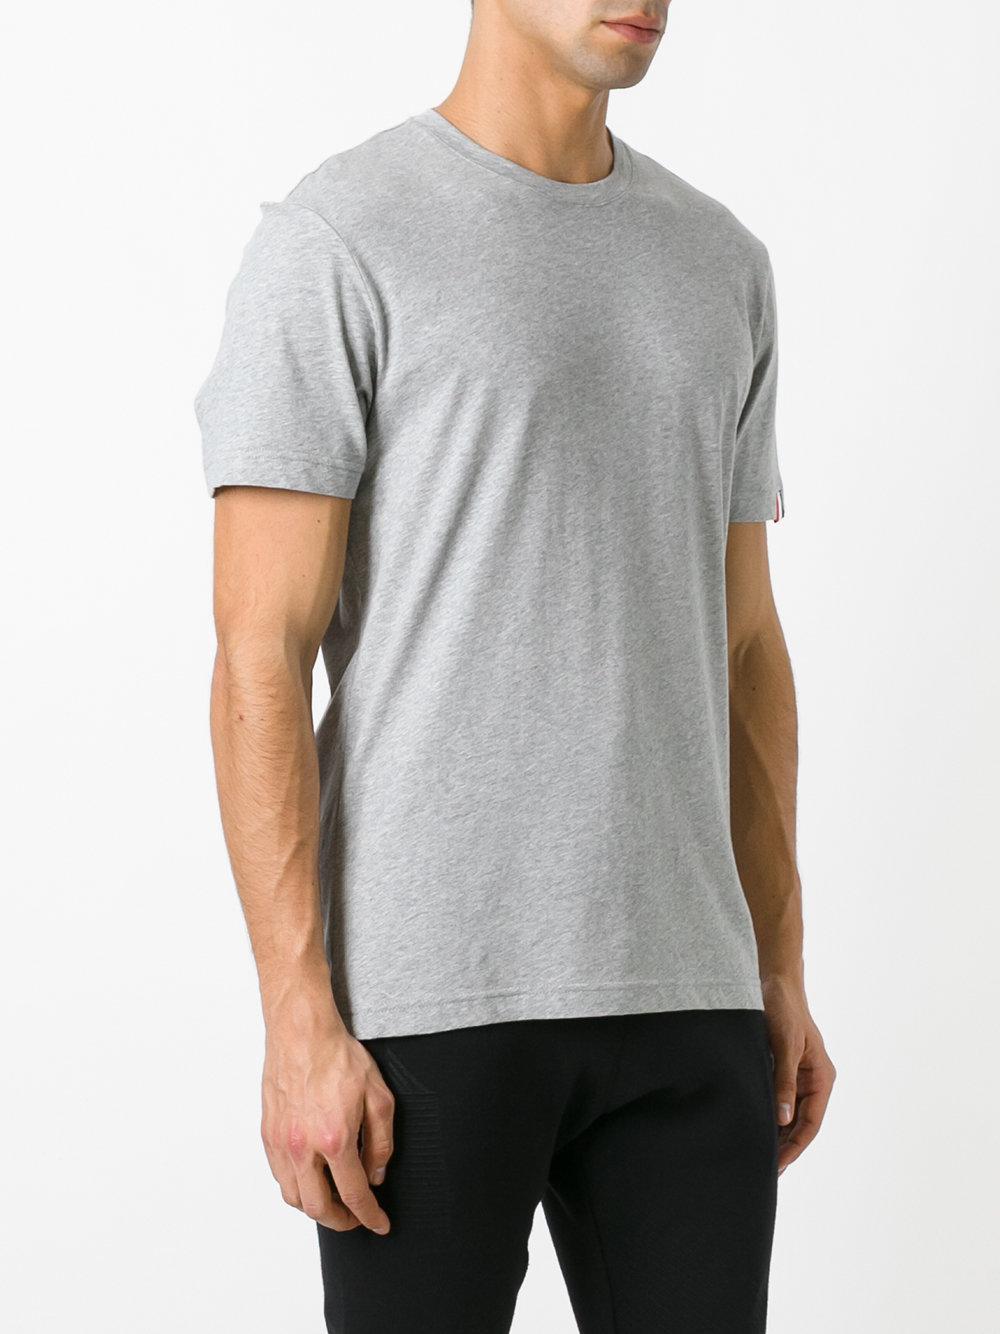 Lyst - Rossignol Antoni T-shirt in Gray for Men